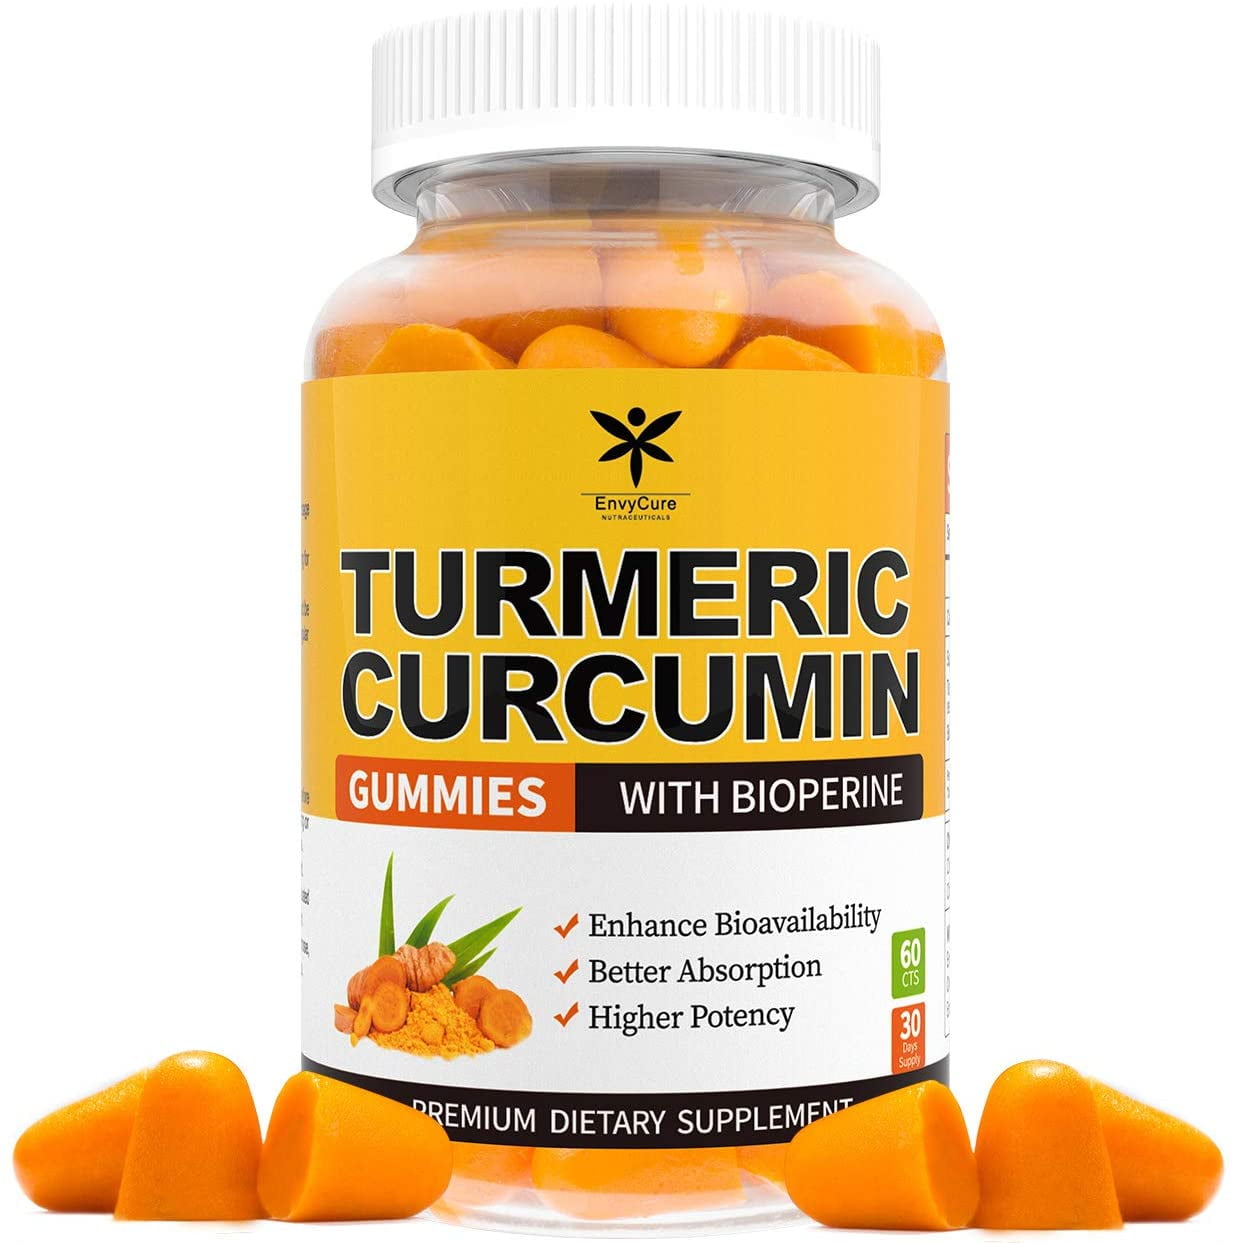 Turmeric’s Golden Power: A Promising Anti-Inflammatory Spice